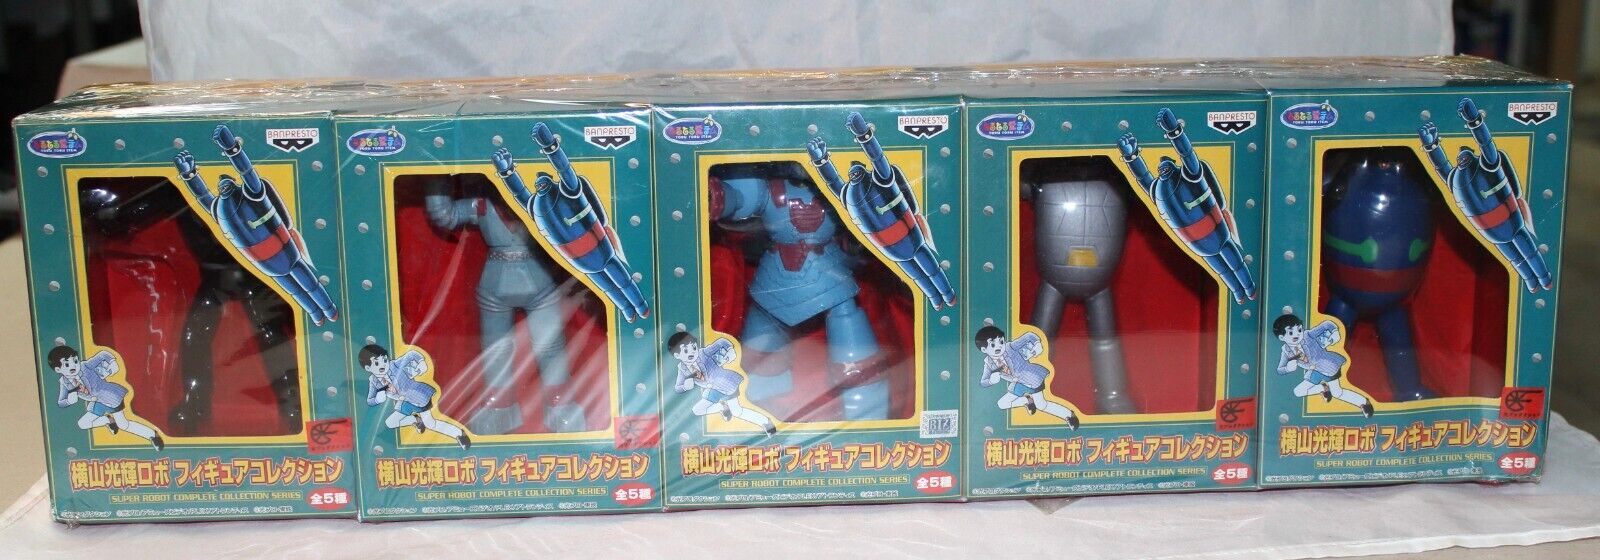 ENTIRE BANPRESTO 1998 Retro Giant Robo Super Robot Figure Collection MINT  LOOk